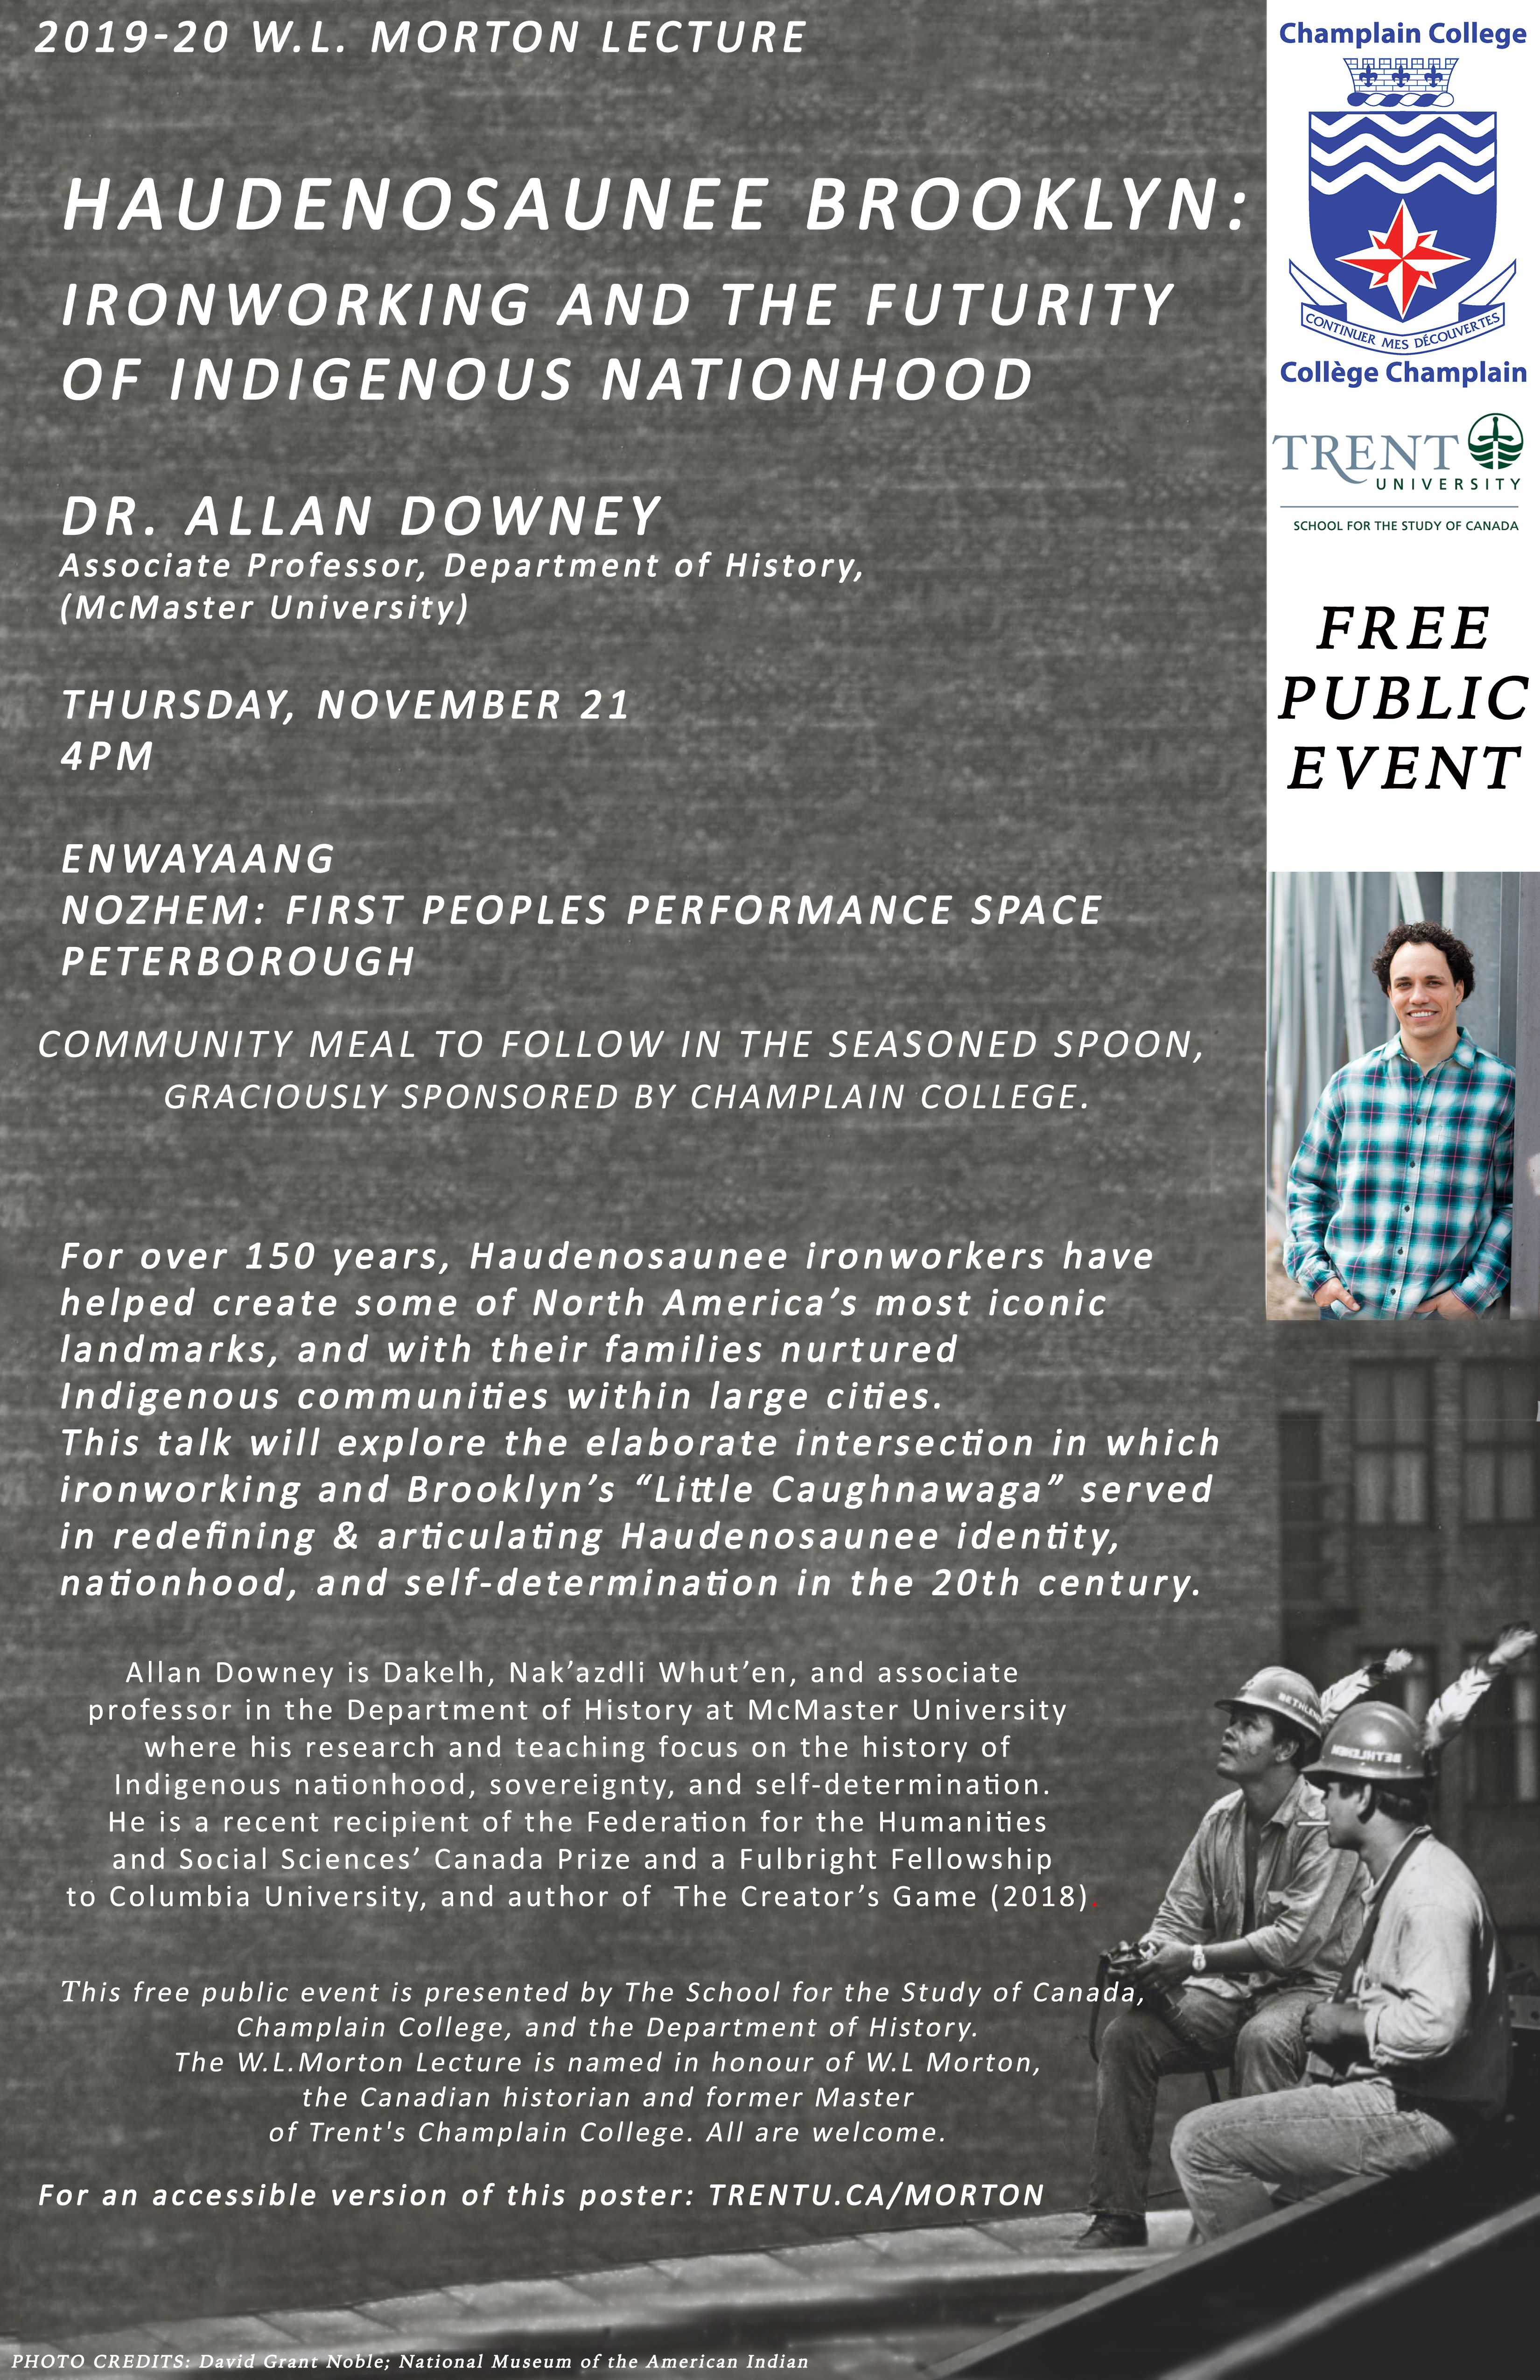 2019 Morton Lecture Haudenosaunee Brooklyn Dr. Allan Downey, Thursday Nov 21 2019